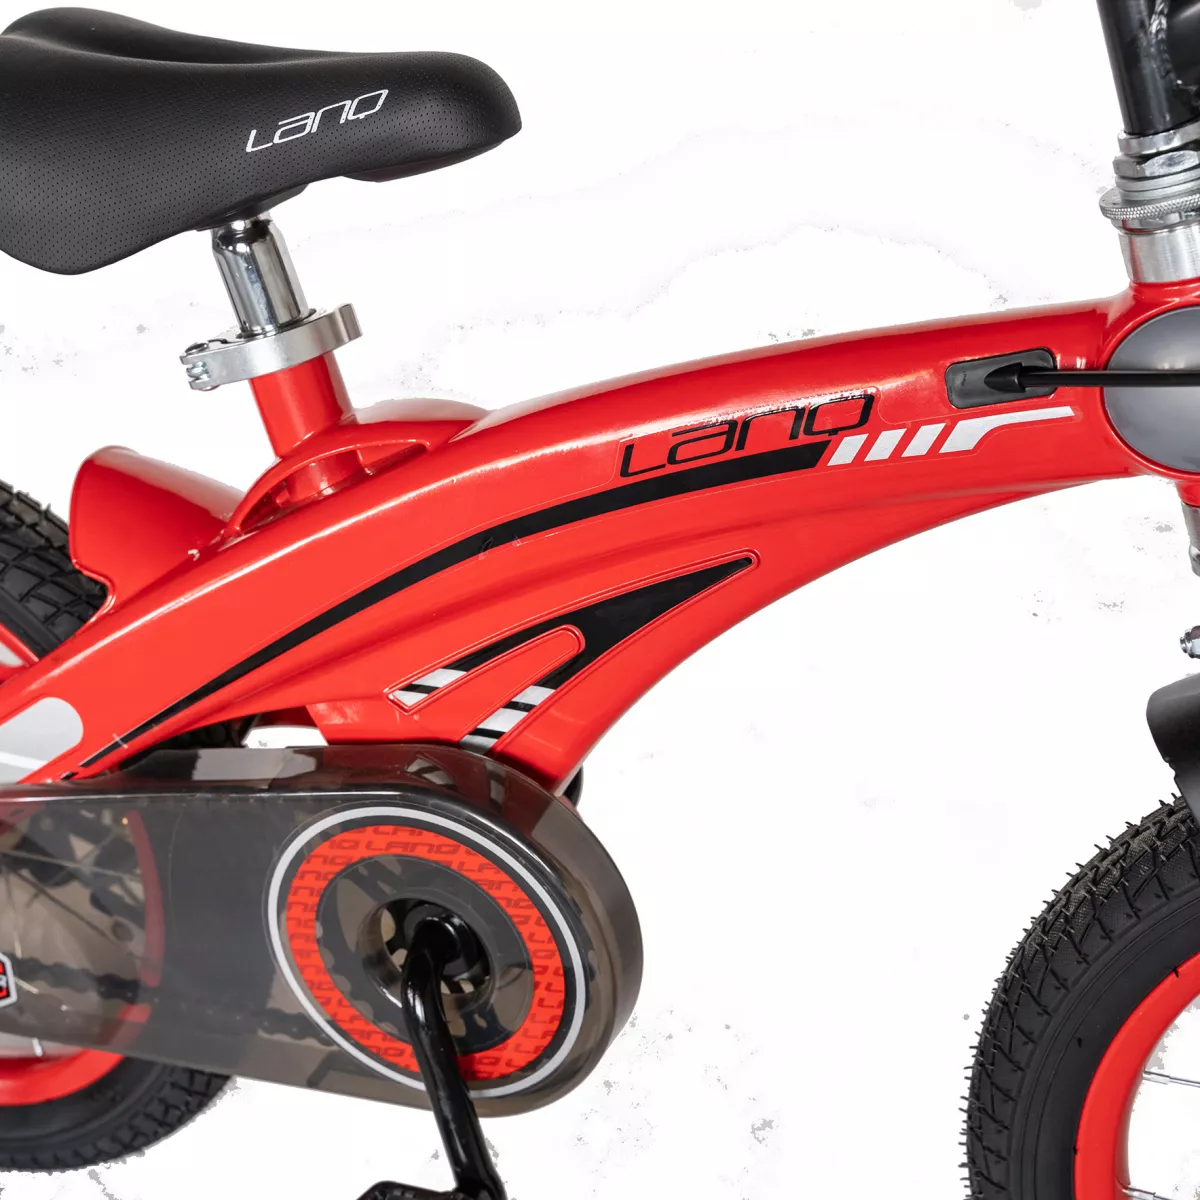 Bicicleta copii W1639D, roata 16", cadru aliaj magneziu, frana C-Brake, roti ajutatoare, 4-6 ani, rosu/negru 